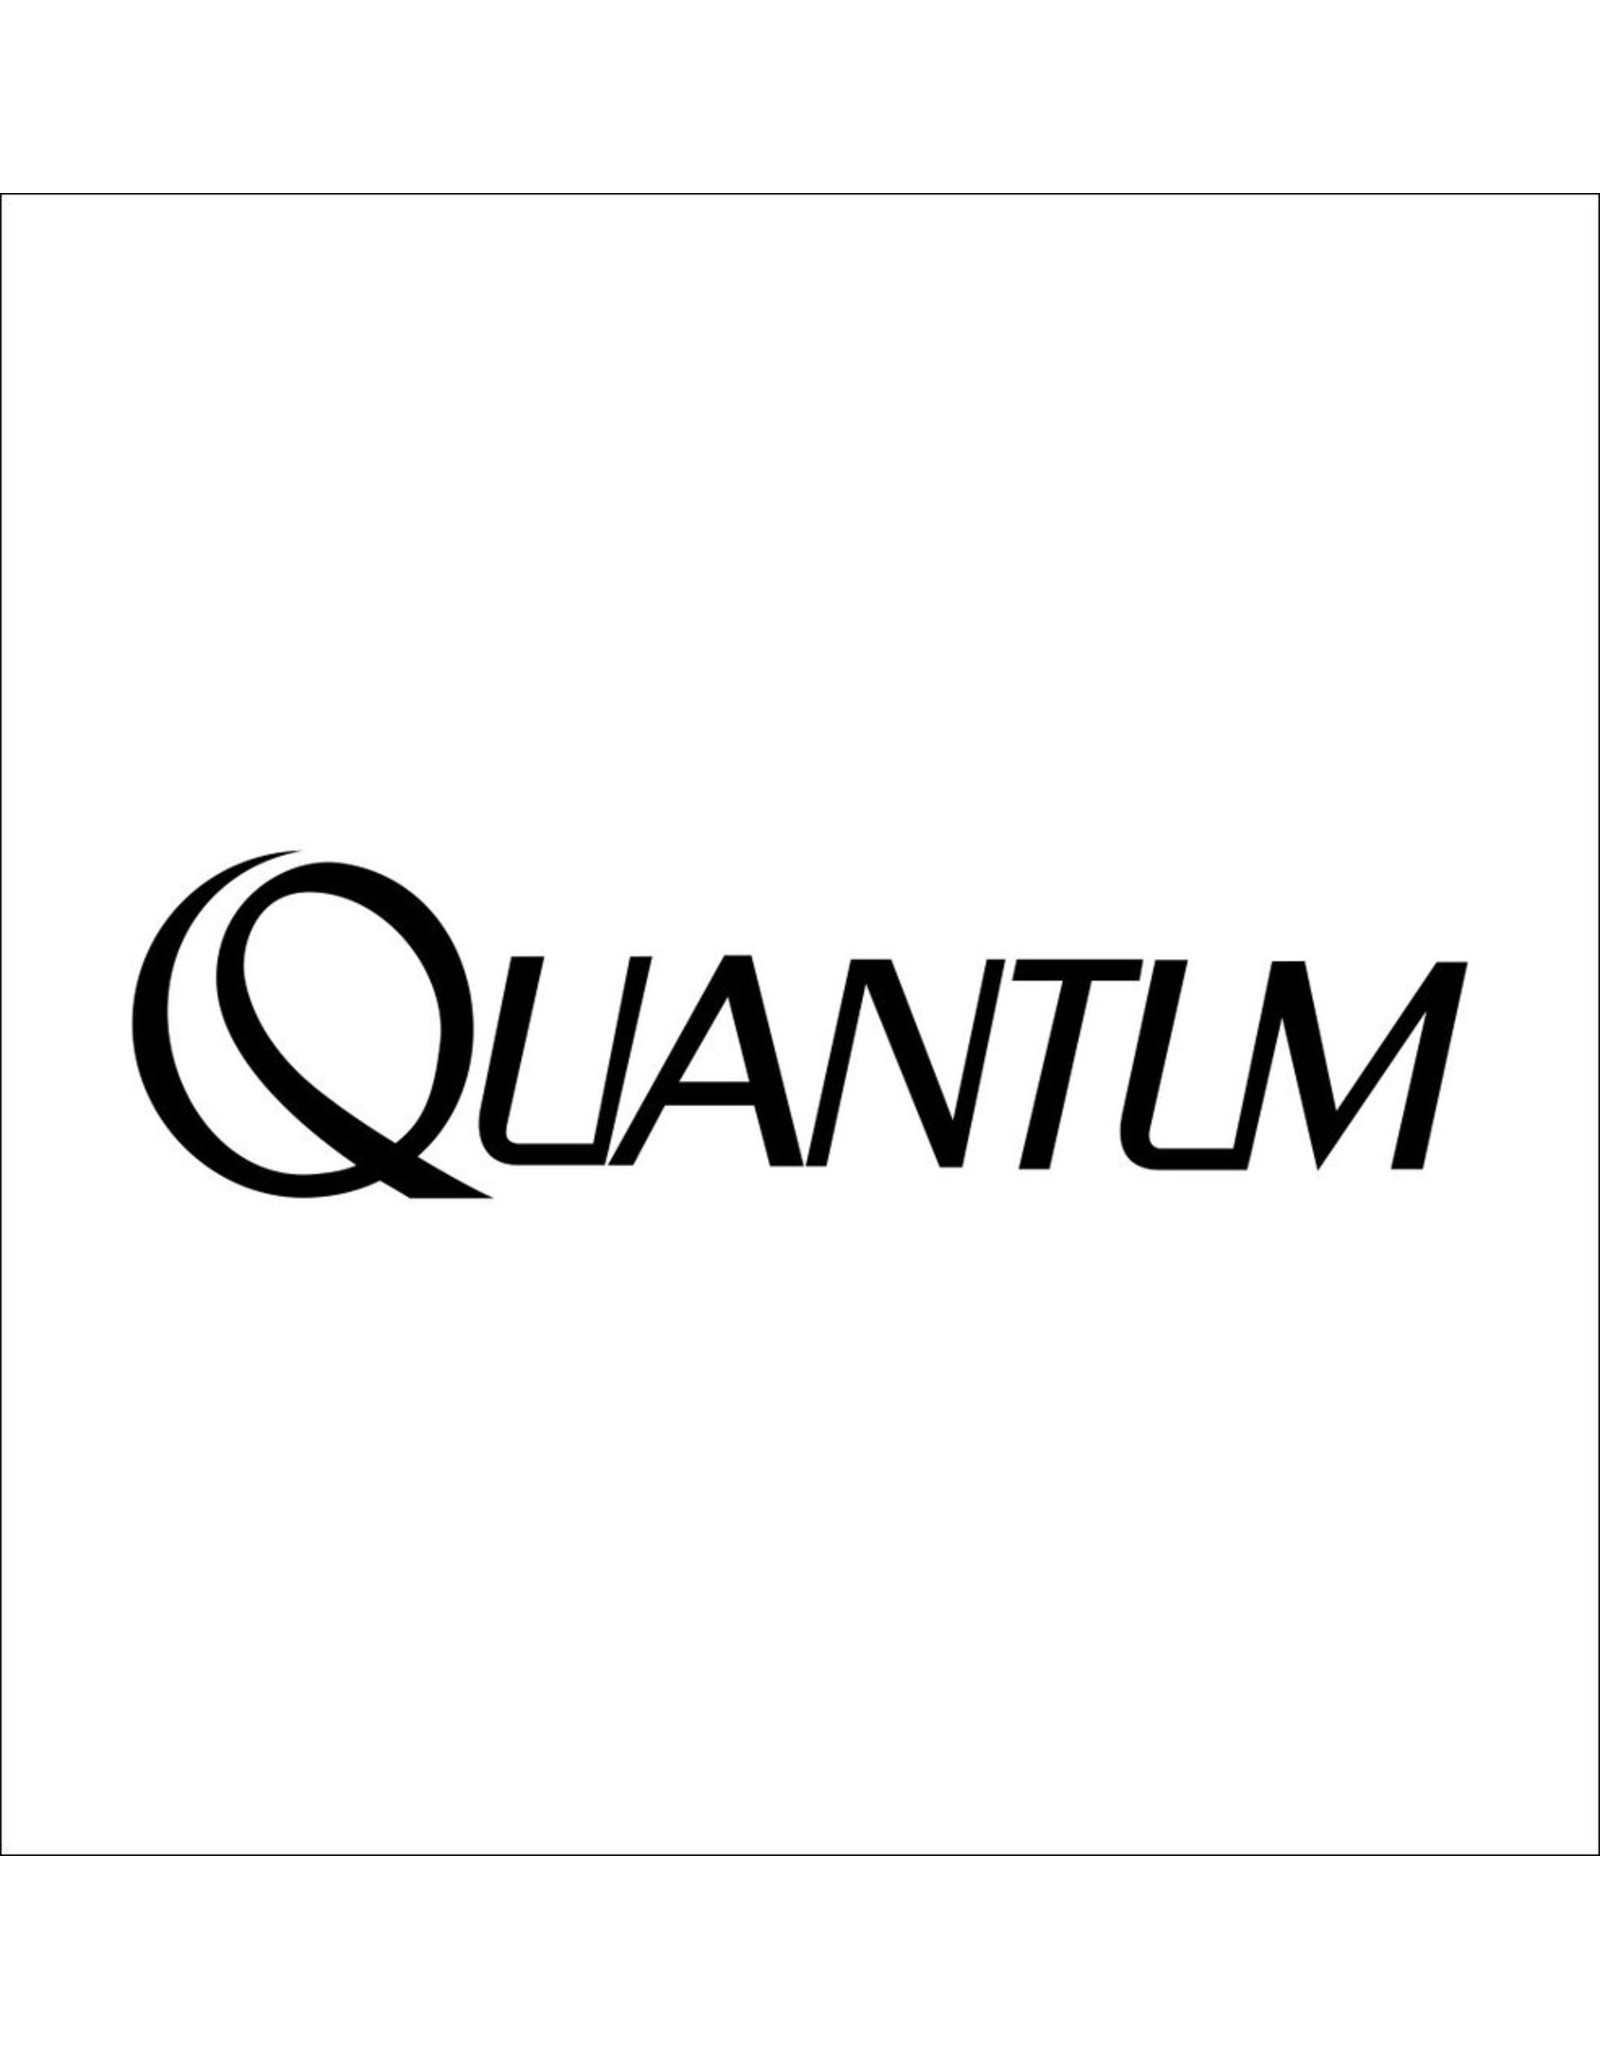 Quantum PX016-01  WORM SHAFT GUIDE